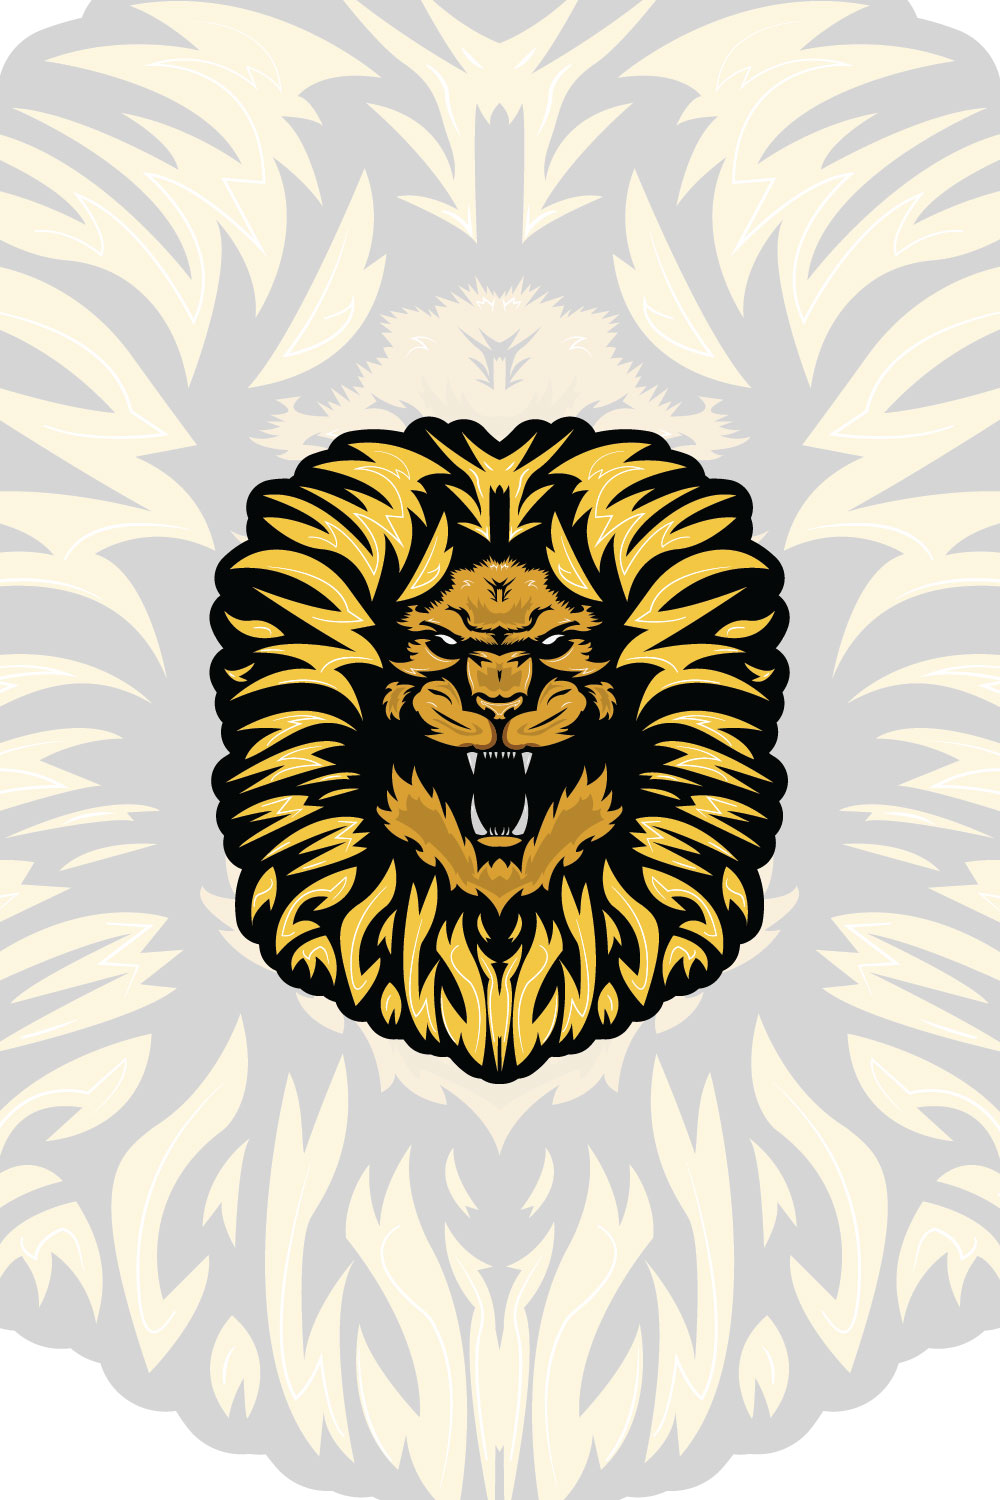 Lion Illustrator Logo pinterest image.